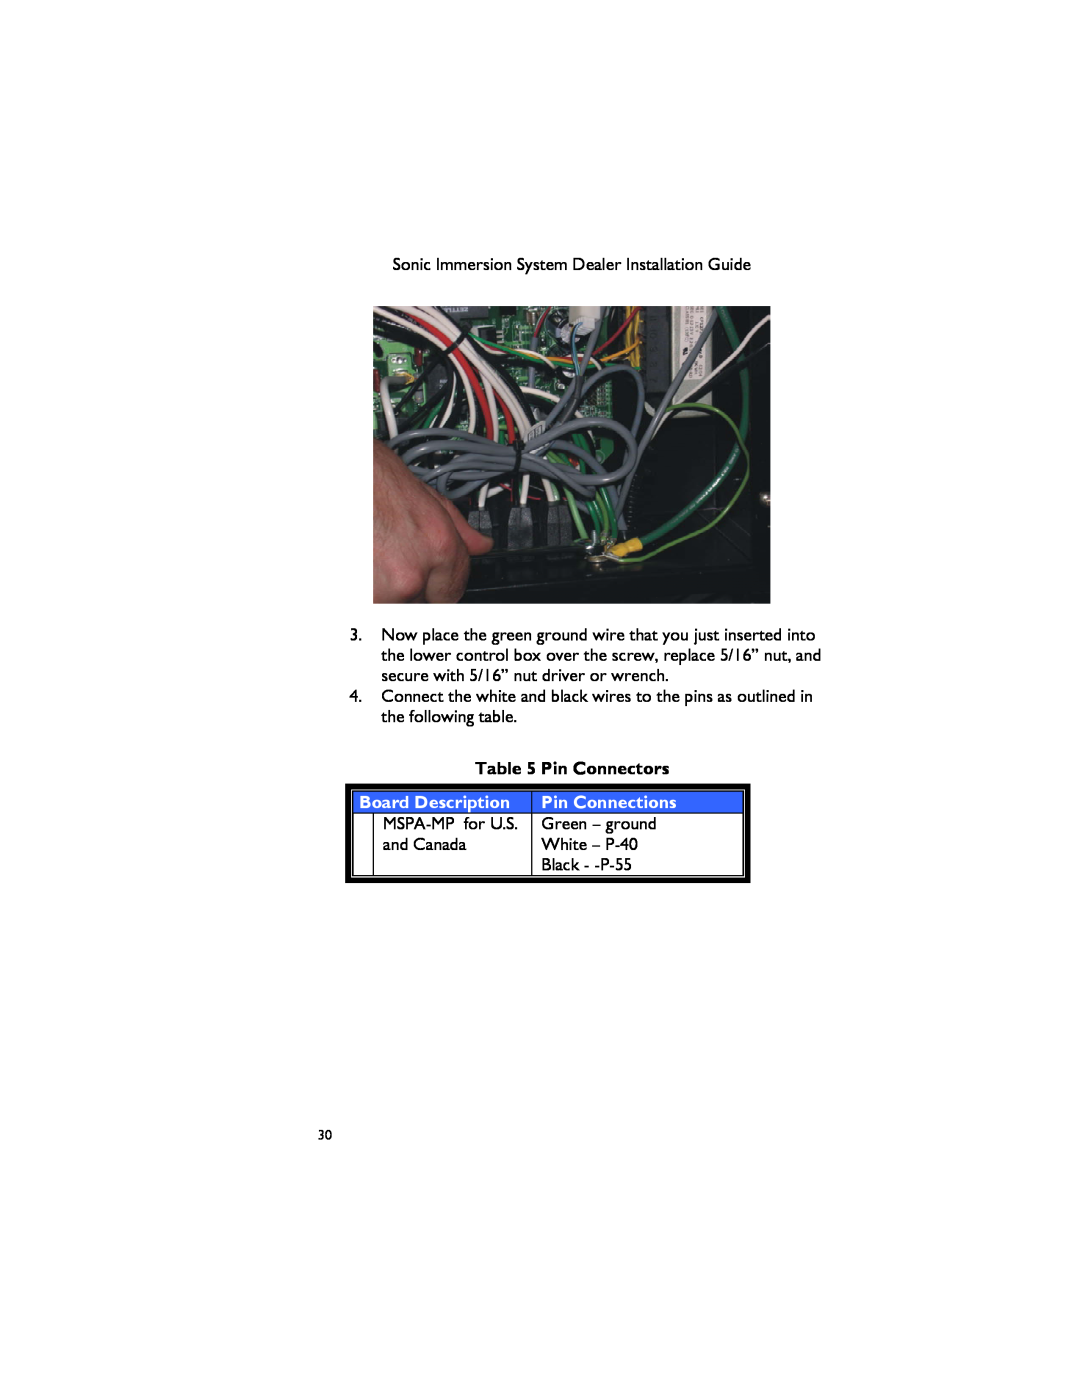 Dimension One Spas 01510-1030 manual Pin Connectors, Board Description, Pin Connections 